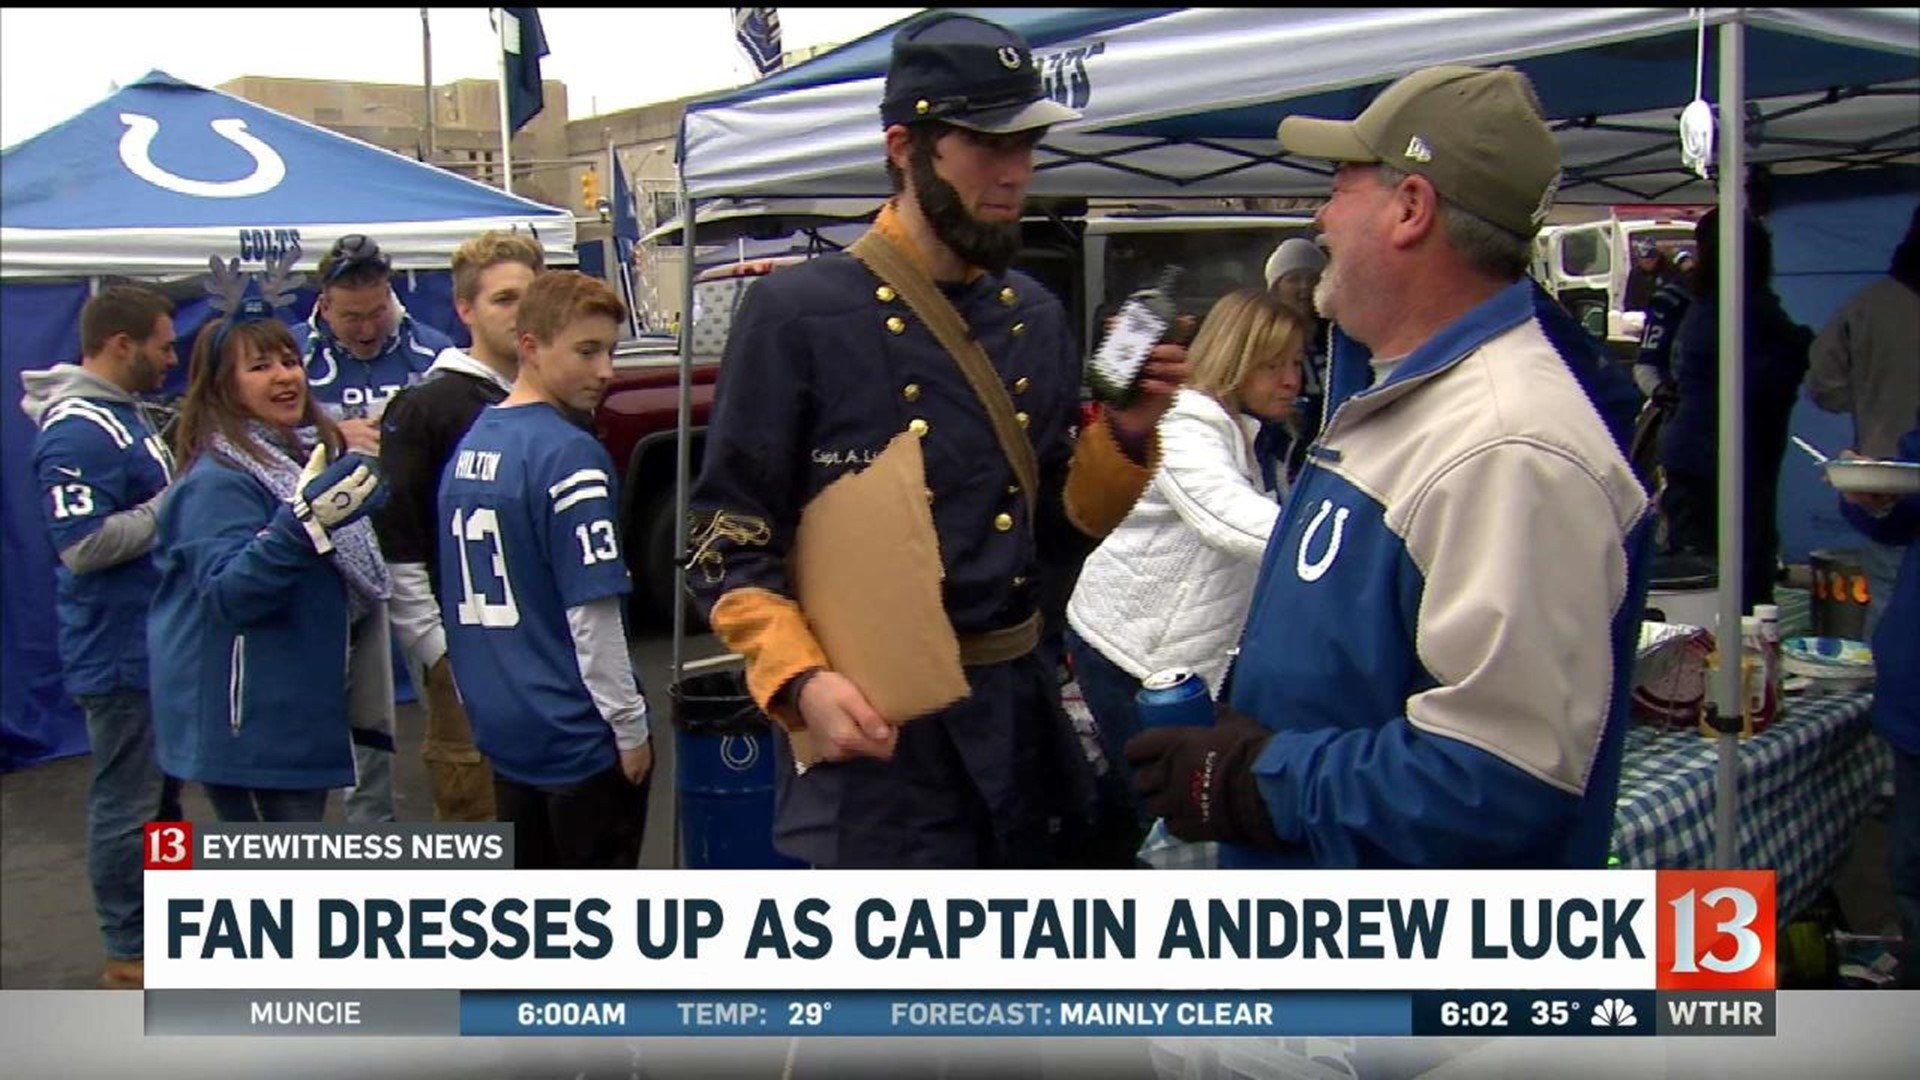 Fan dresses as Captain Andrew Luck